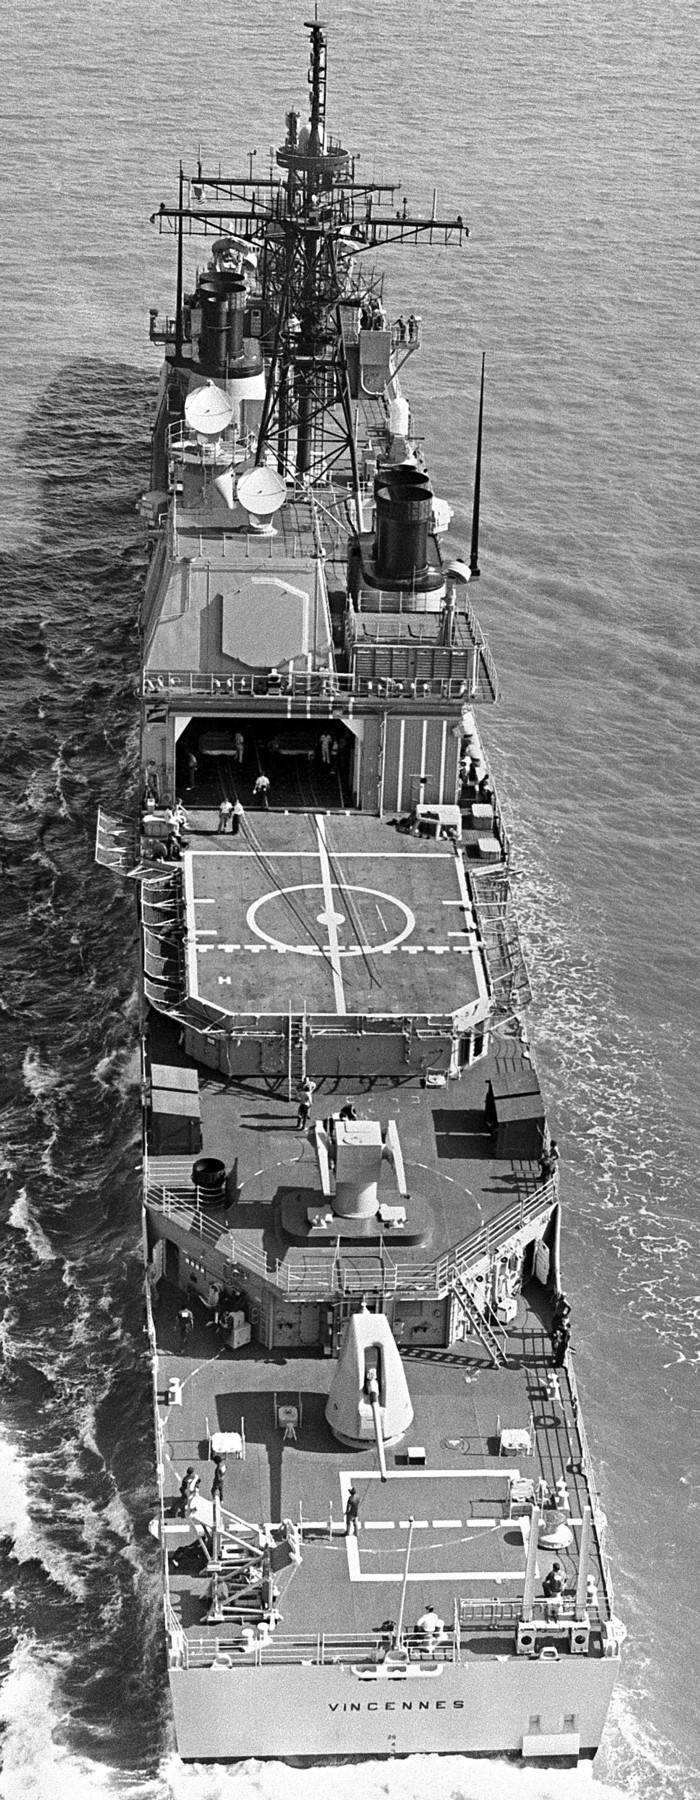 cg-49 uss vincennes ticonderoga class guided missile cruiser aegis us navy 33